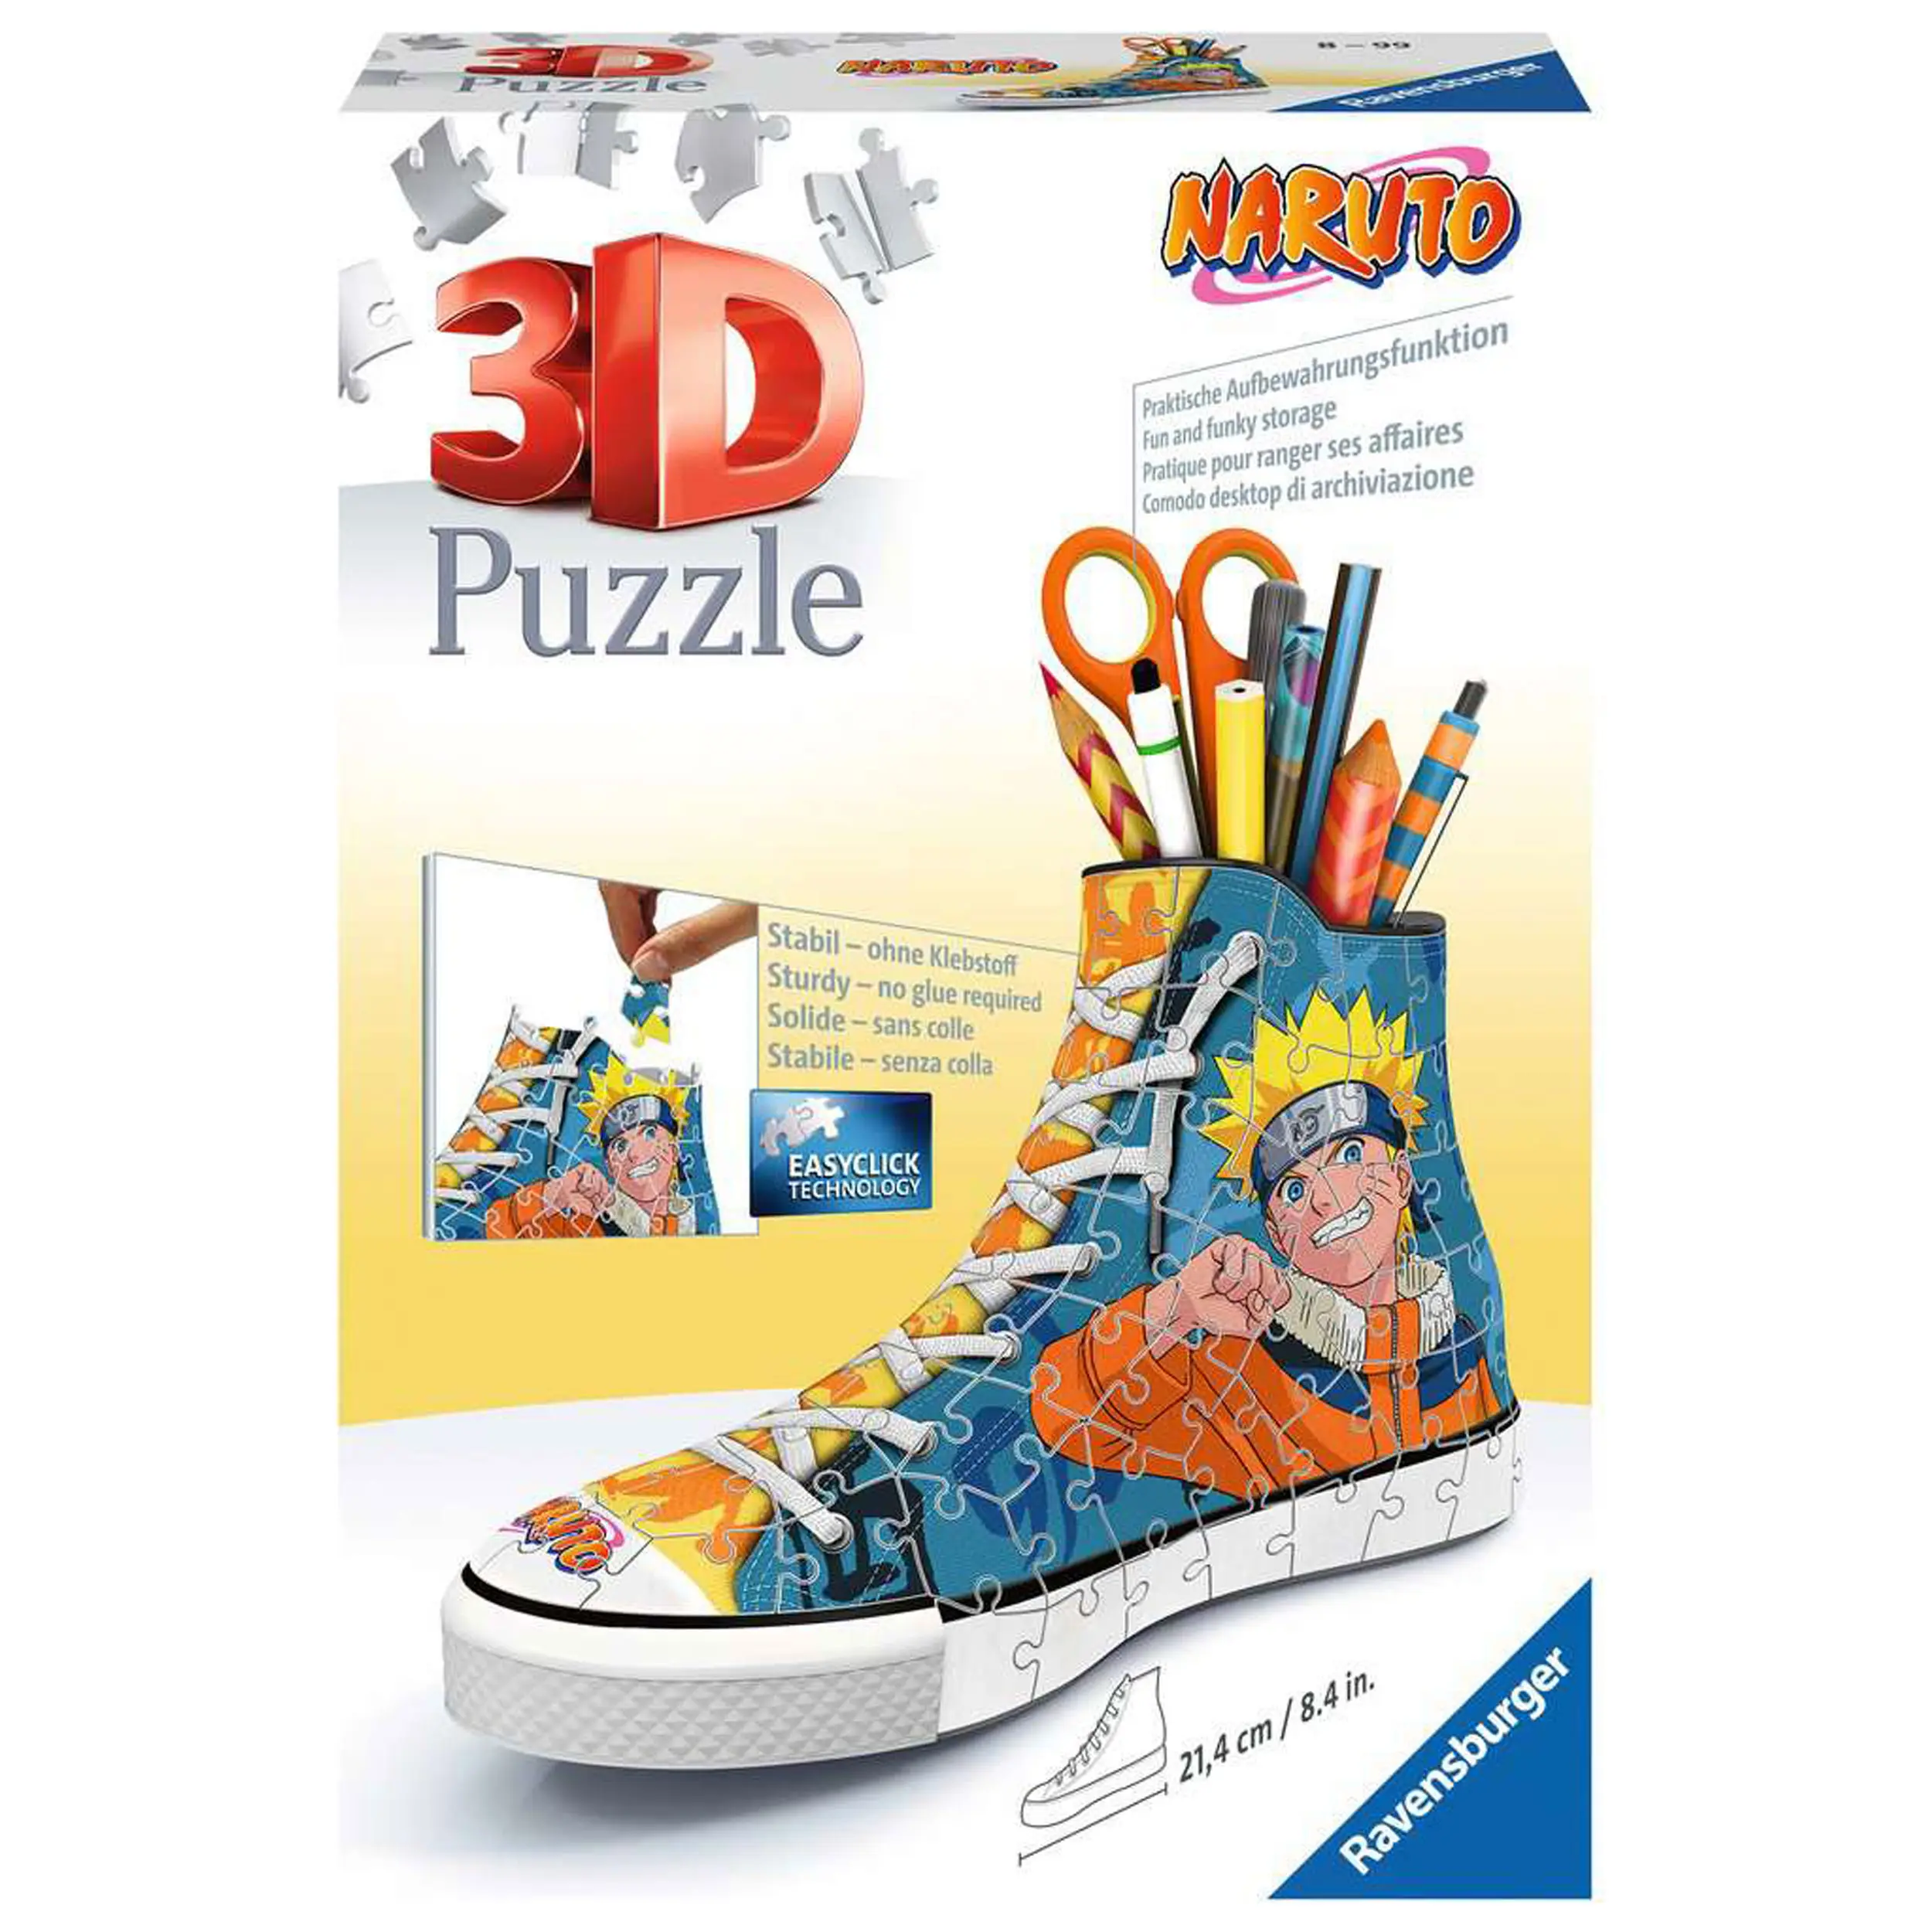 3D-Puzzle Sneaker Naruto